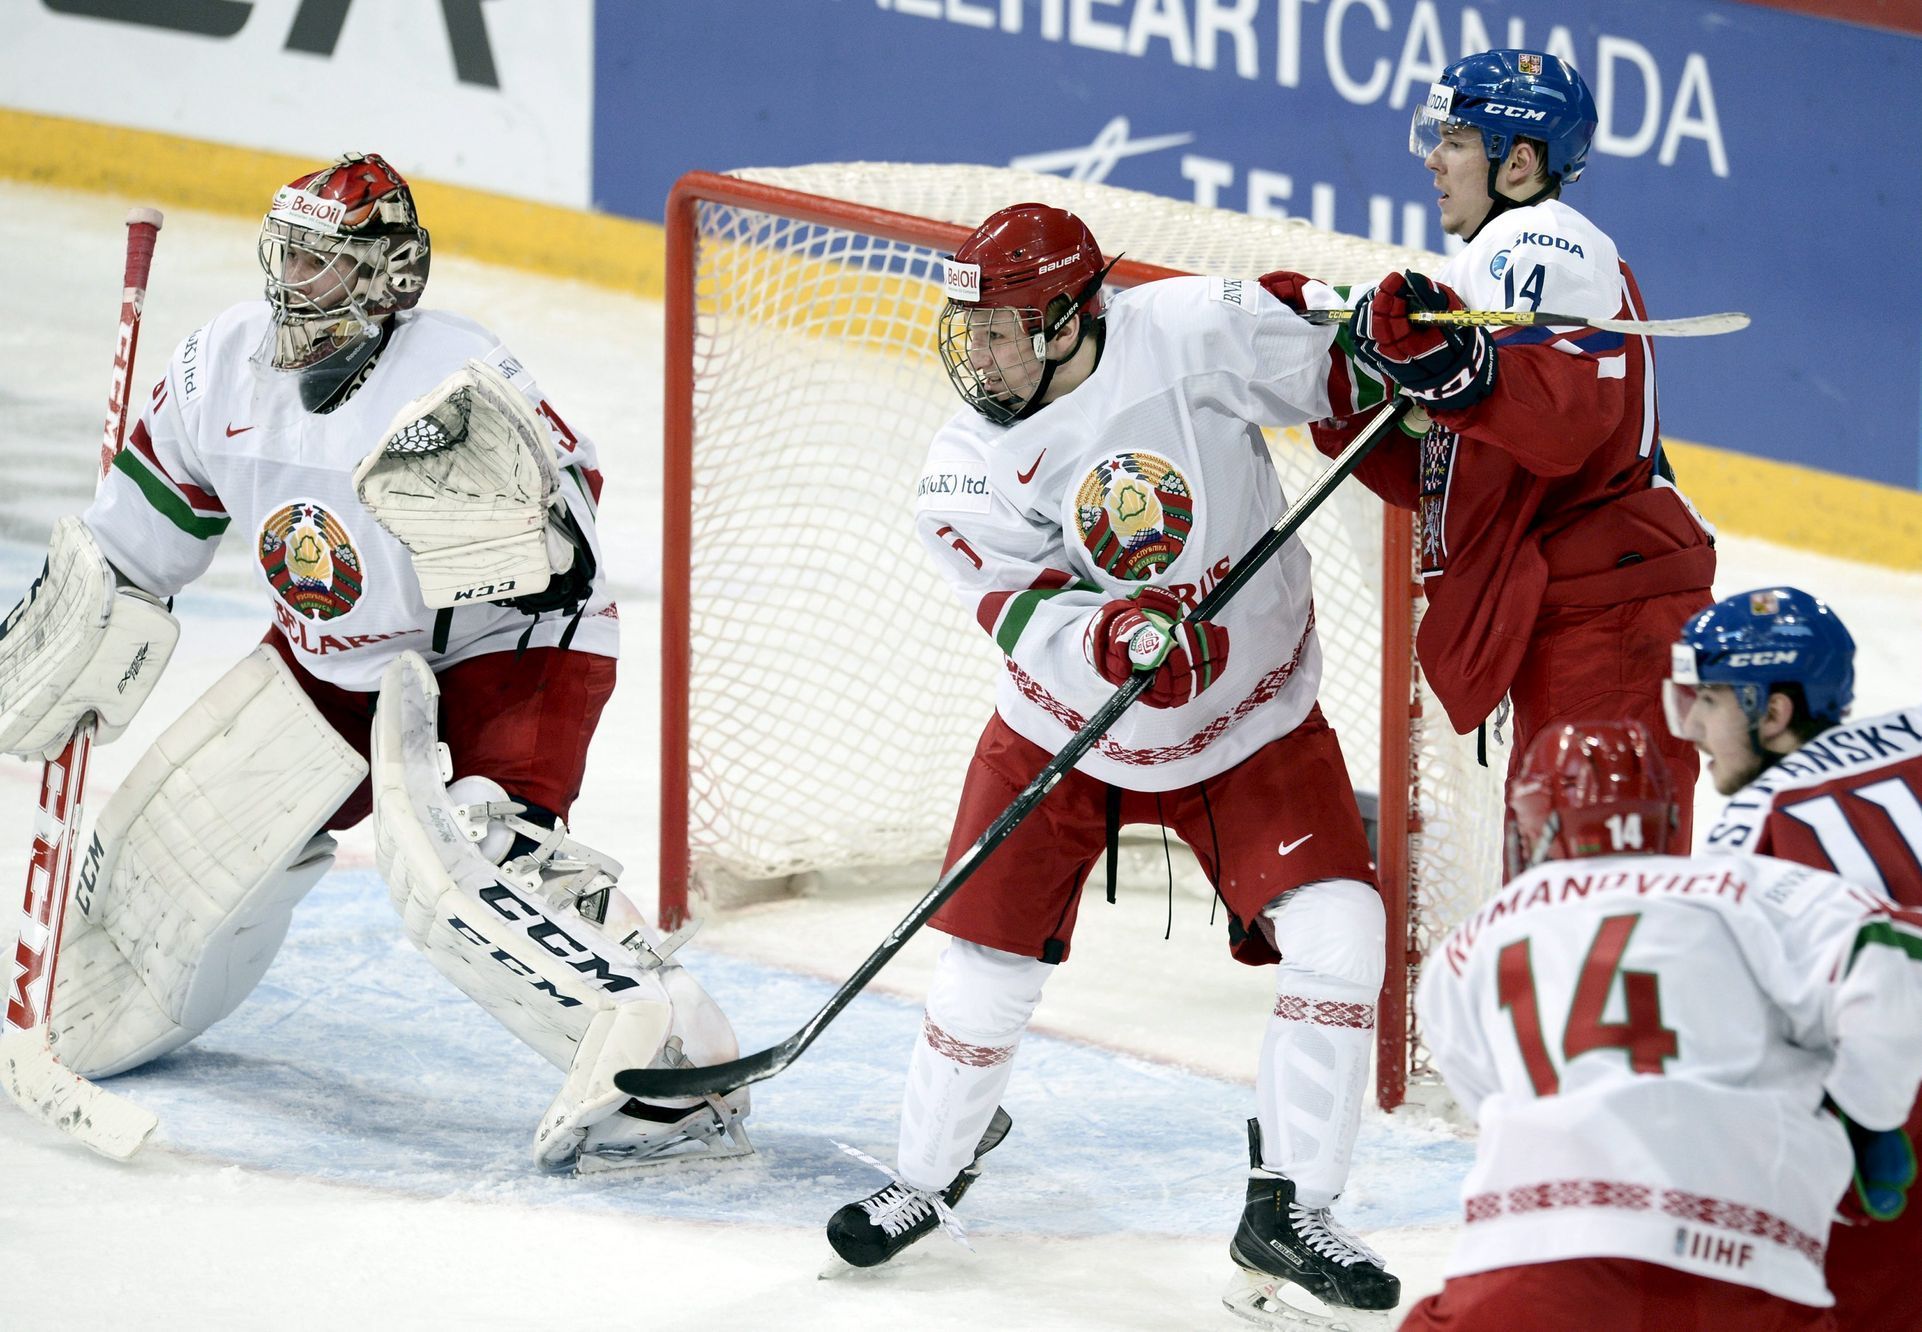 2016 IIHF World Junior Ice Hockey Championship in Helsinki